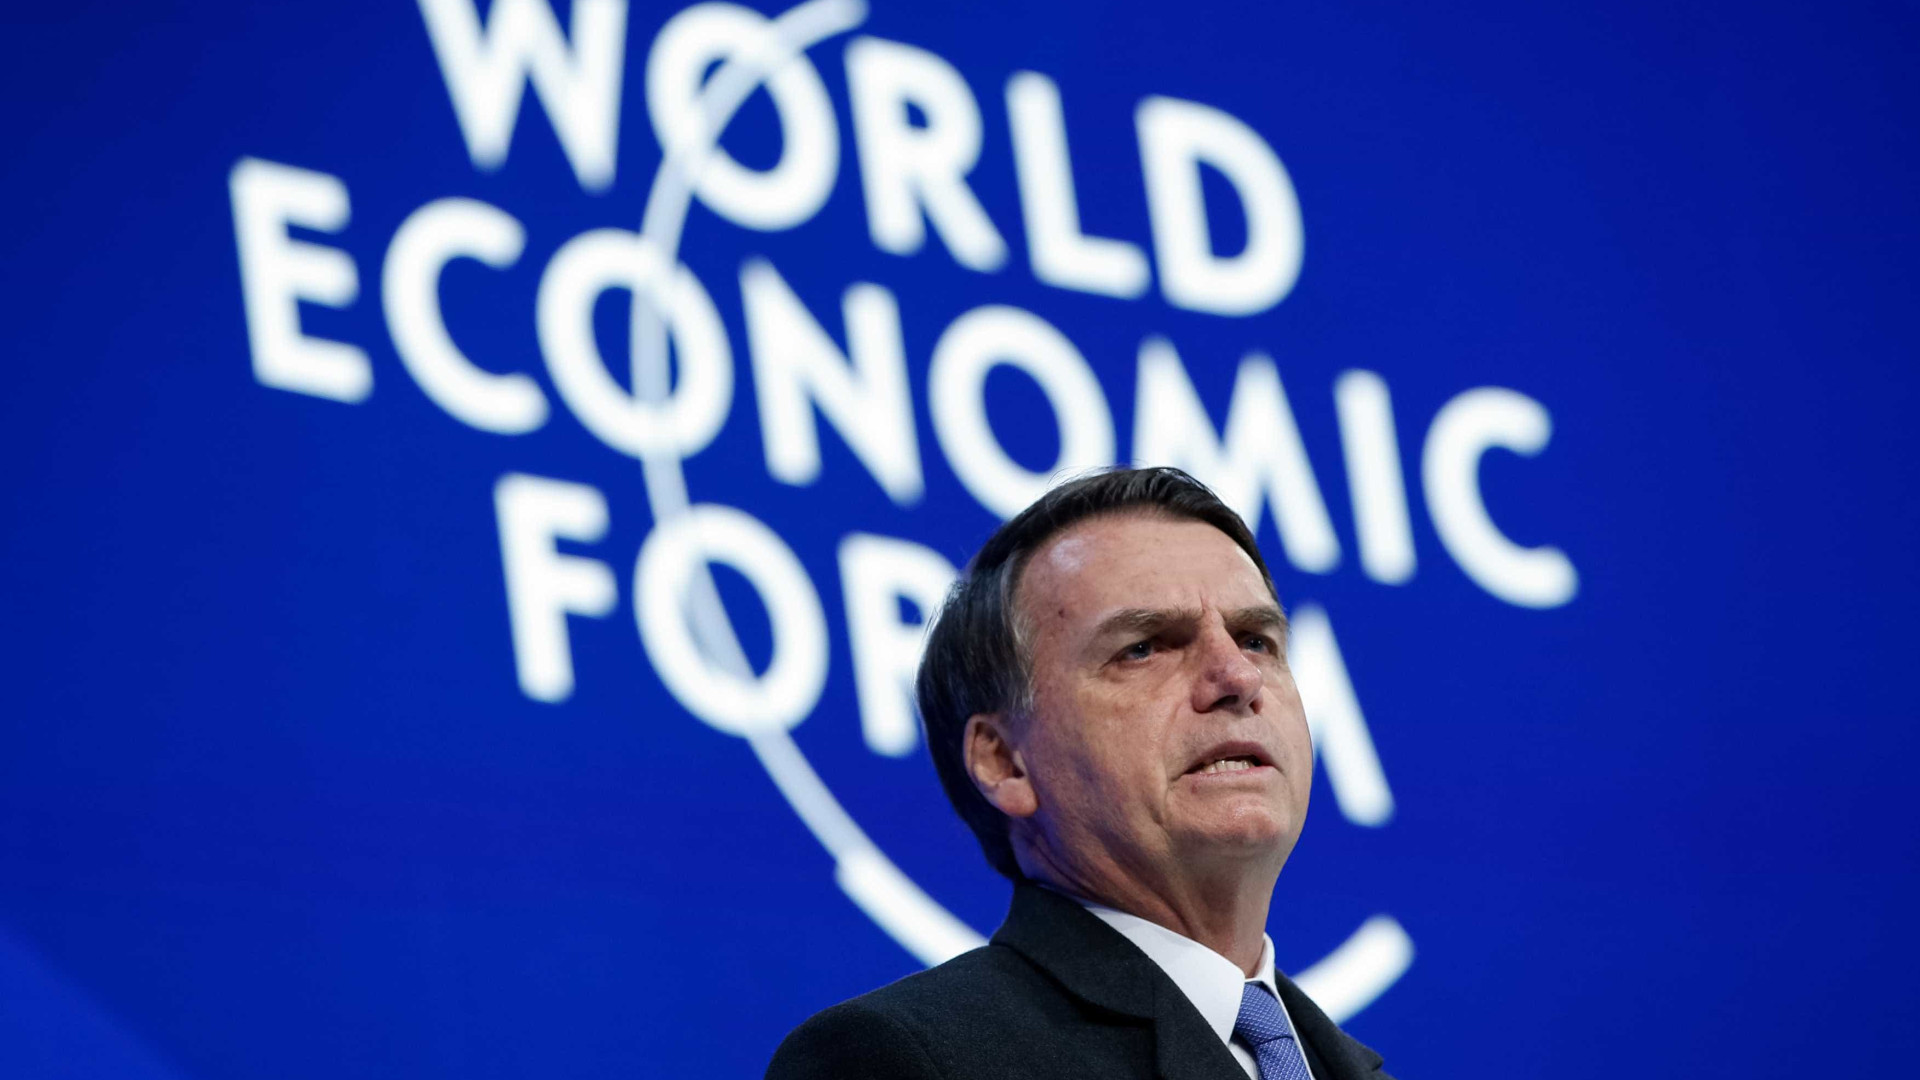 Analistas de mercado acharam raso discurso de Bolsonaro em Davos